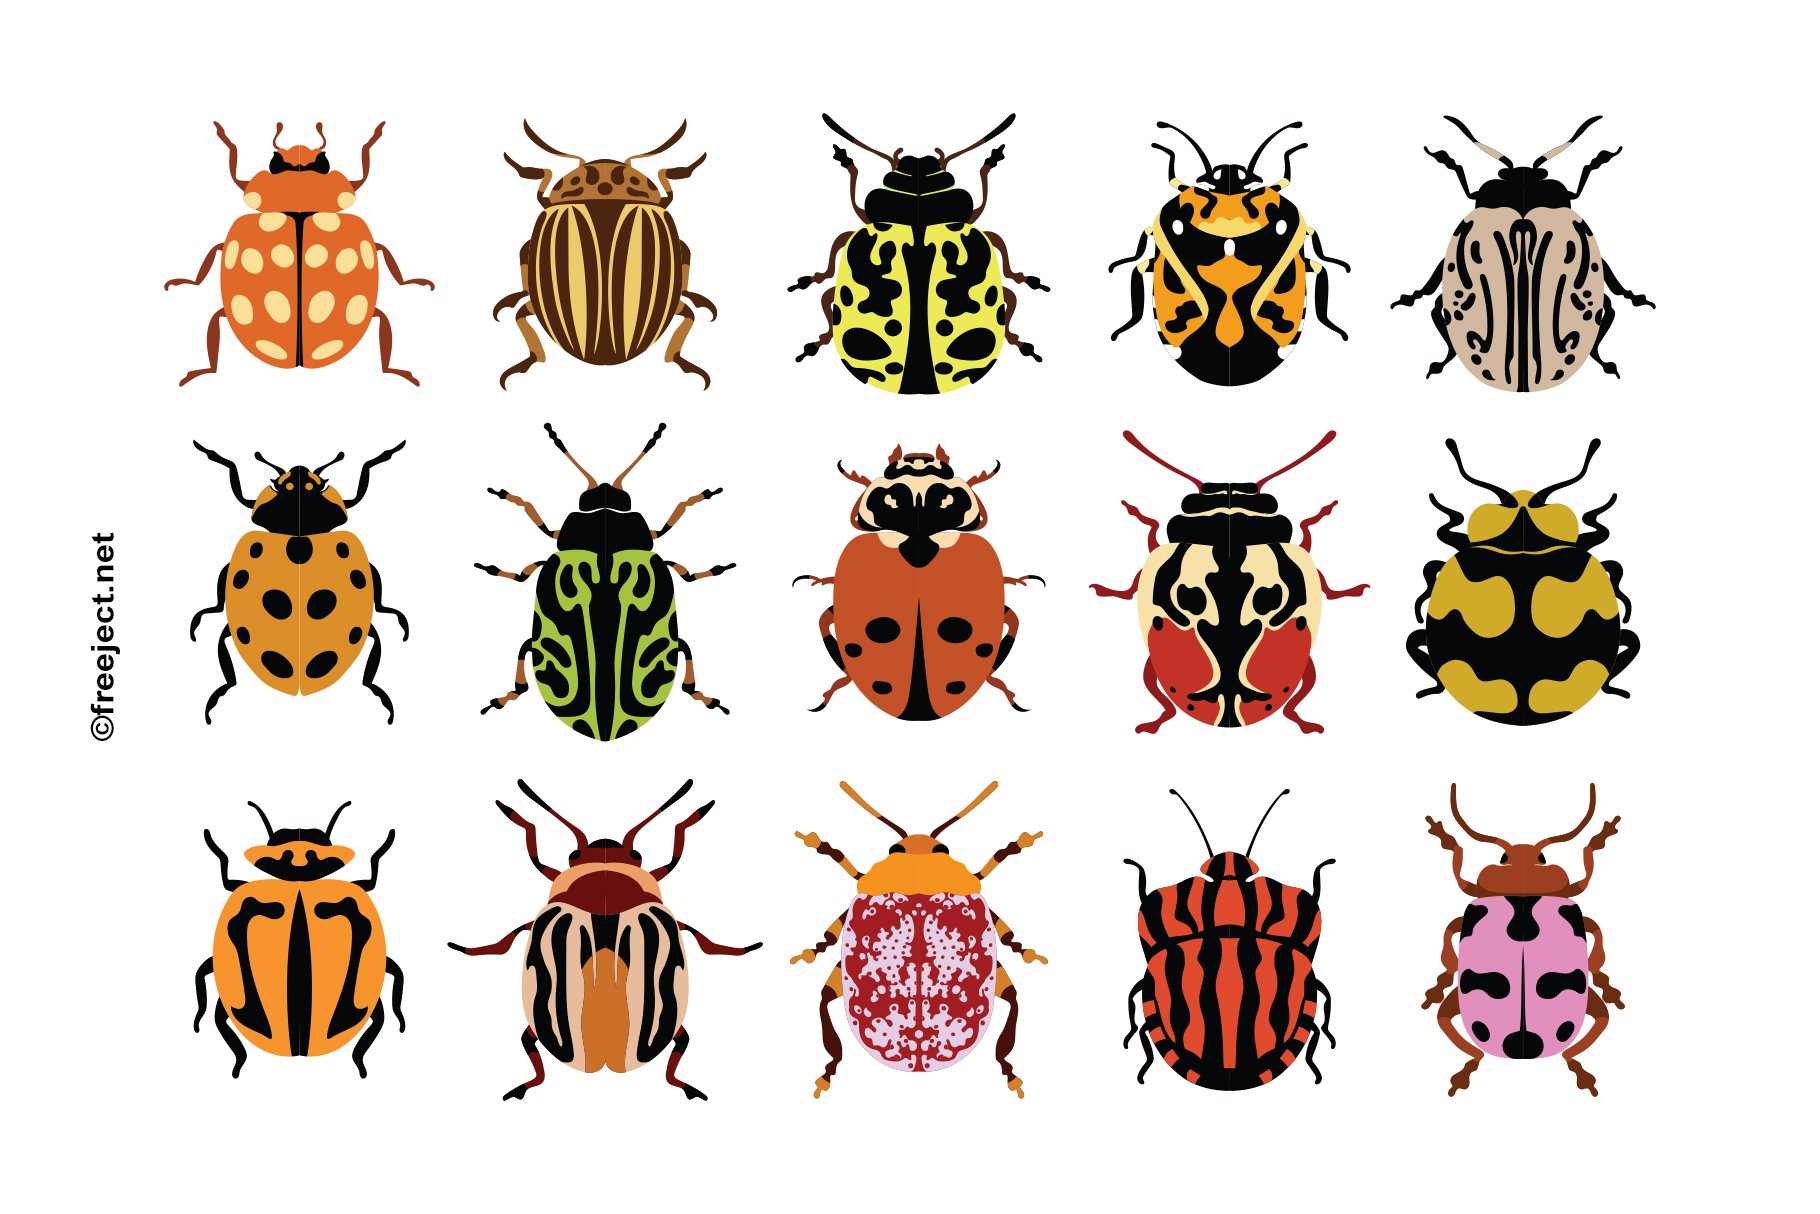 Bug Vector & PNG Illustration cover image.